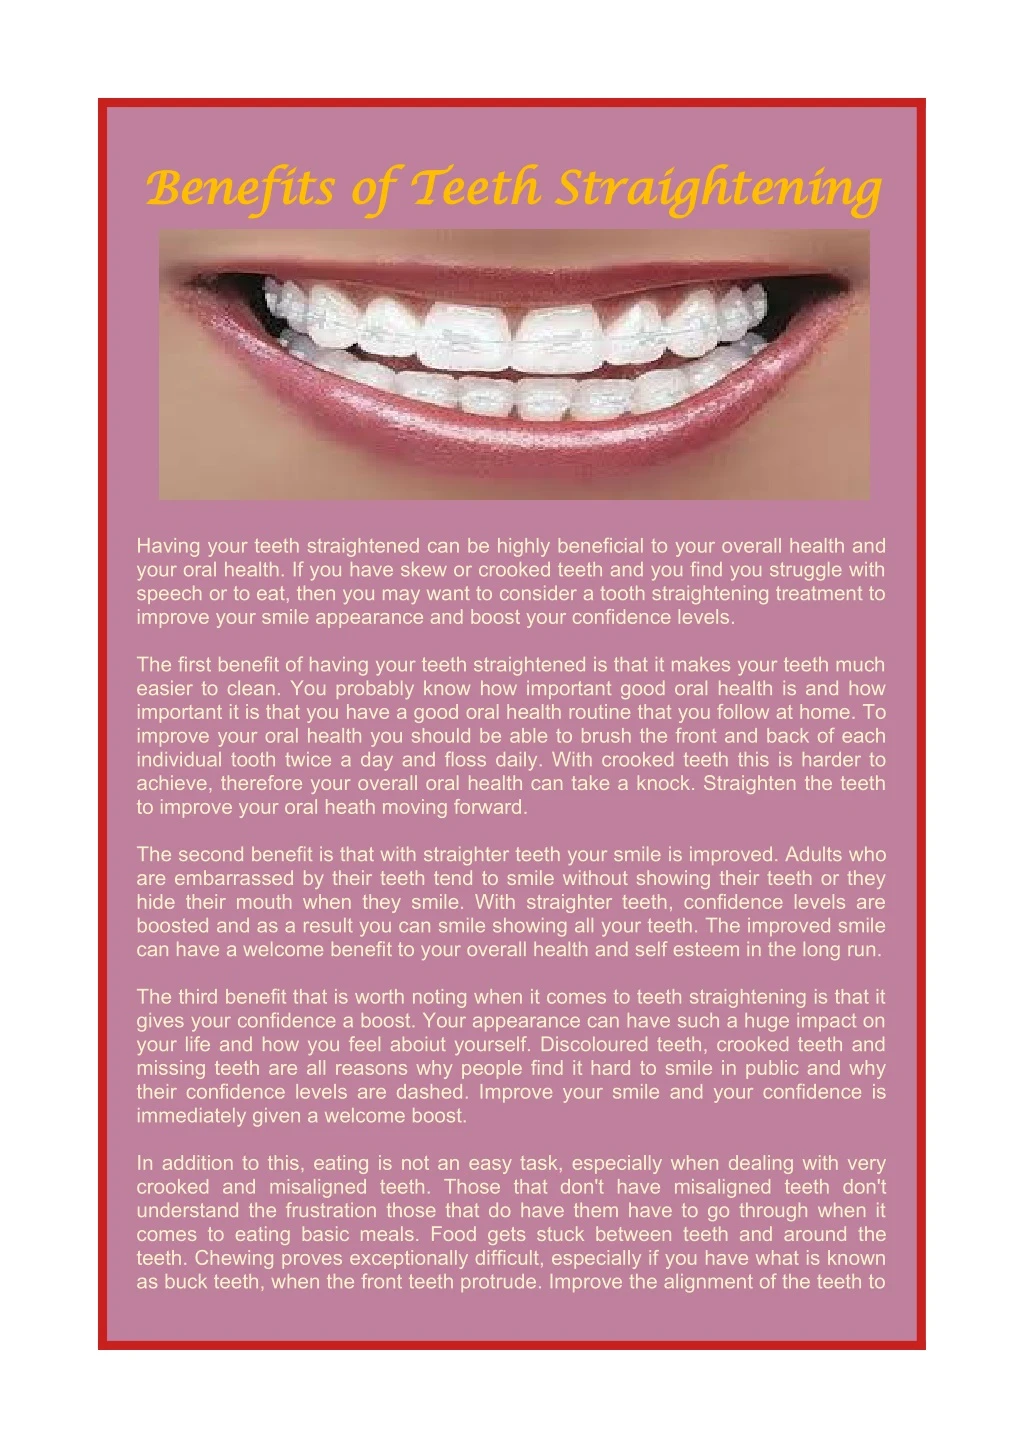 benefits of teeth straightening benefits of teeth